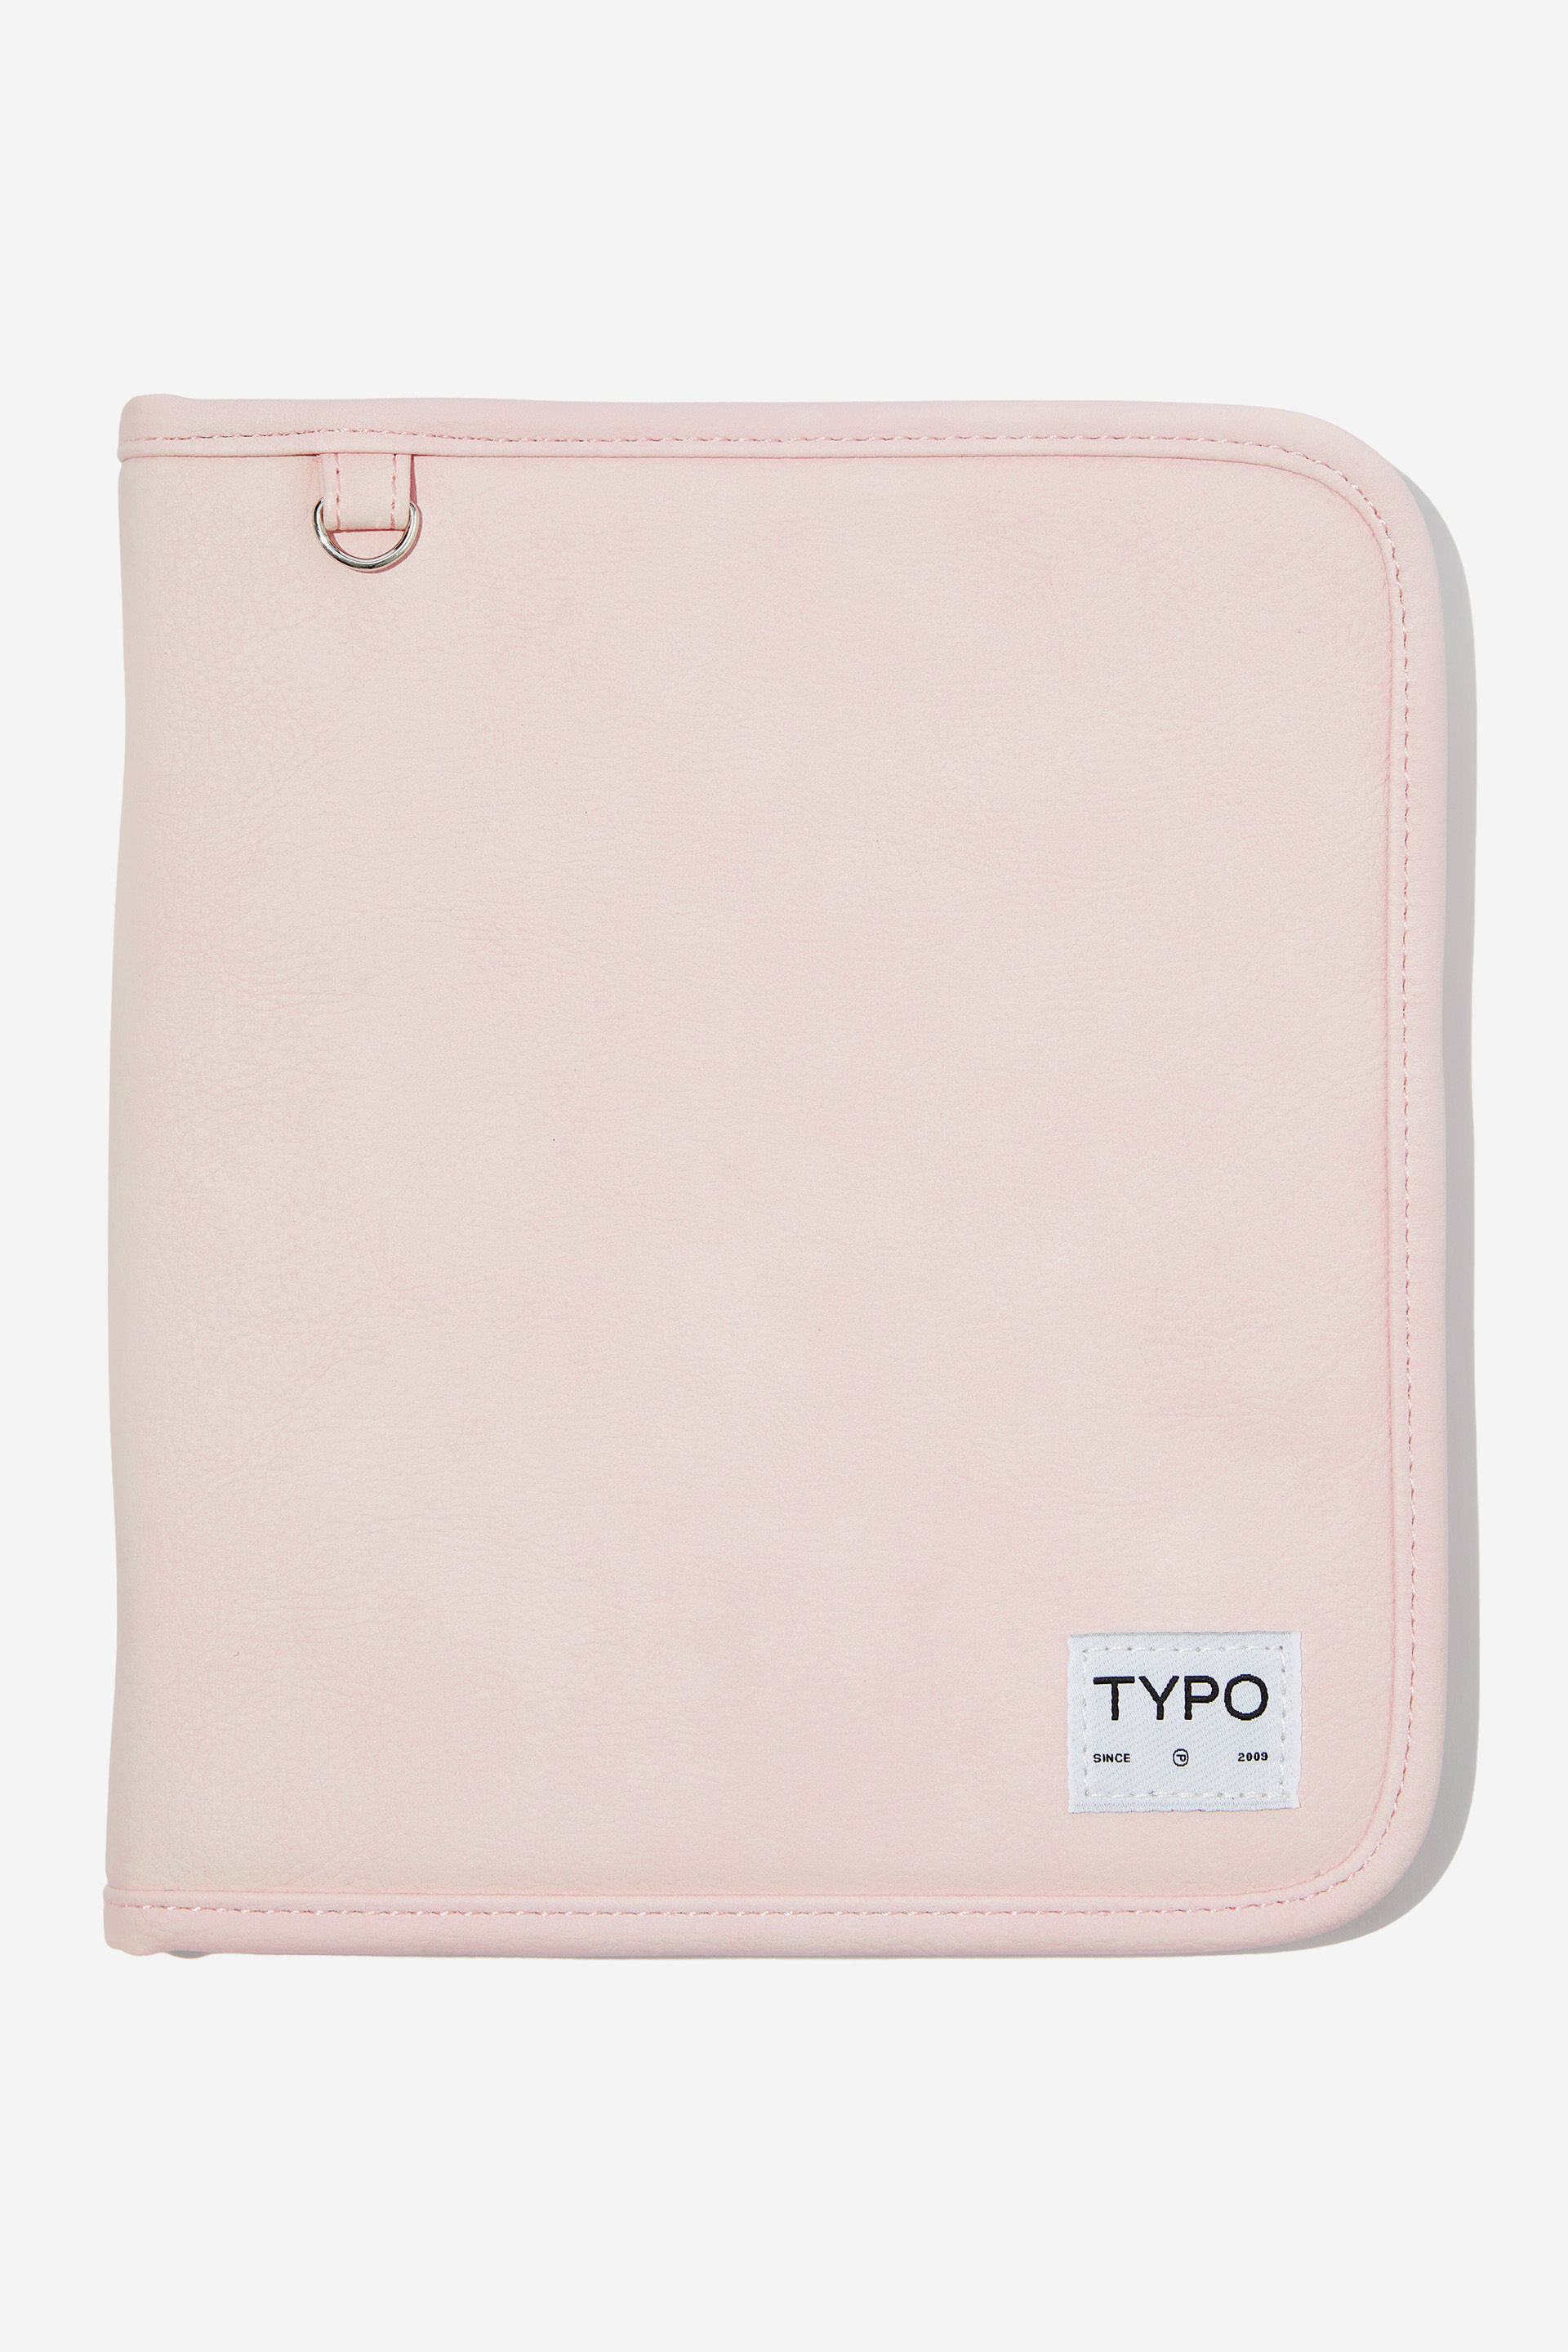 Typo - Ultimate Organiser Pencil Case - Ballet blush